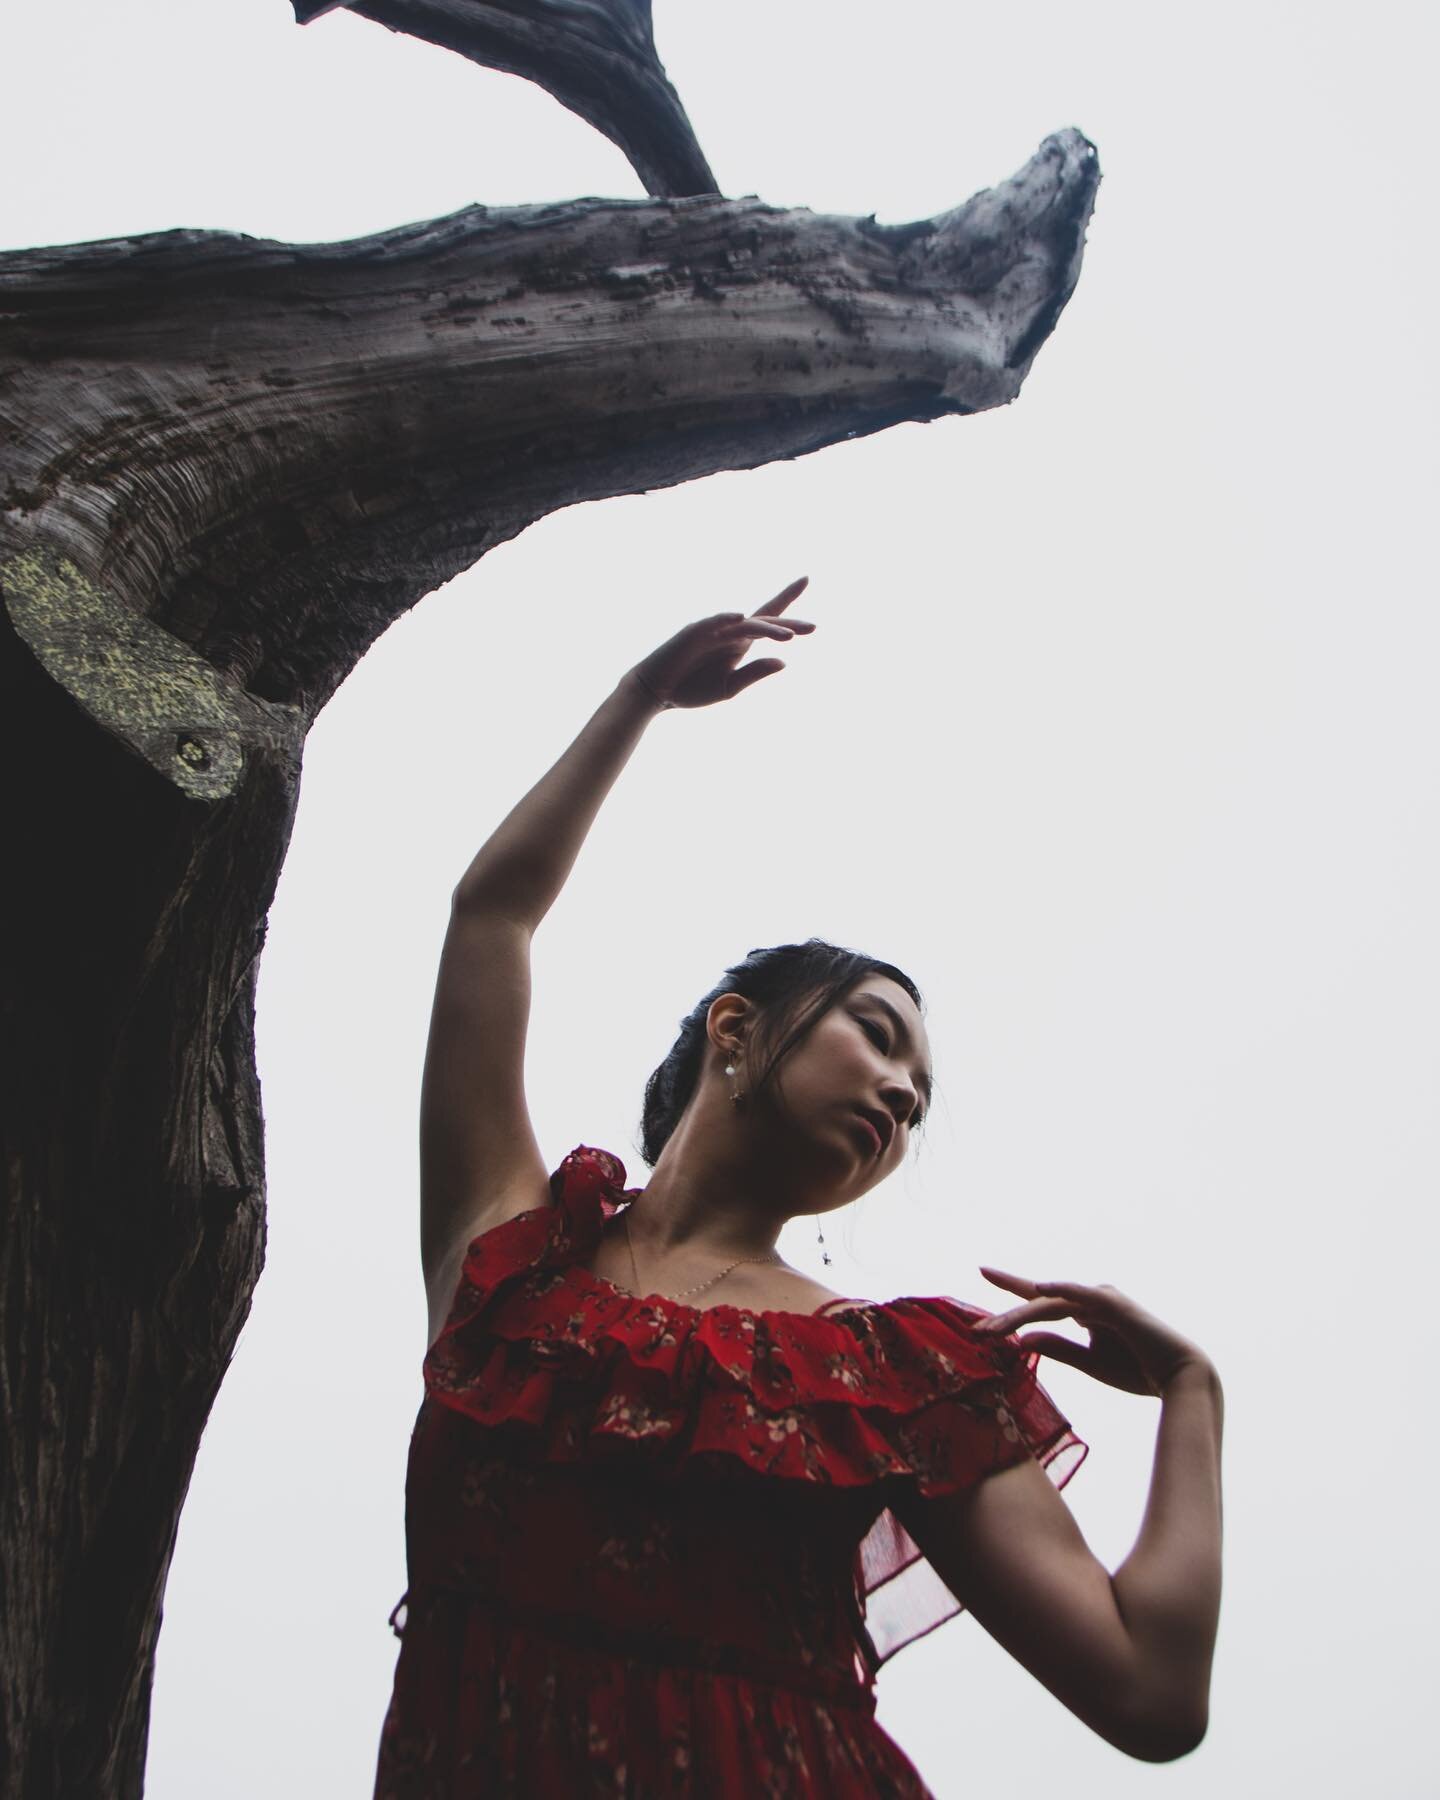 Lydia came home 🪽

-
-
-
#photography #dance #ballet #sanfrancisco #bayarea #movement #dancephotography #editorial #editorialphotography #editorialdesign #fashionphotography #portraitphotography